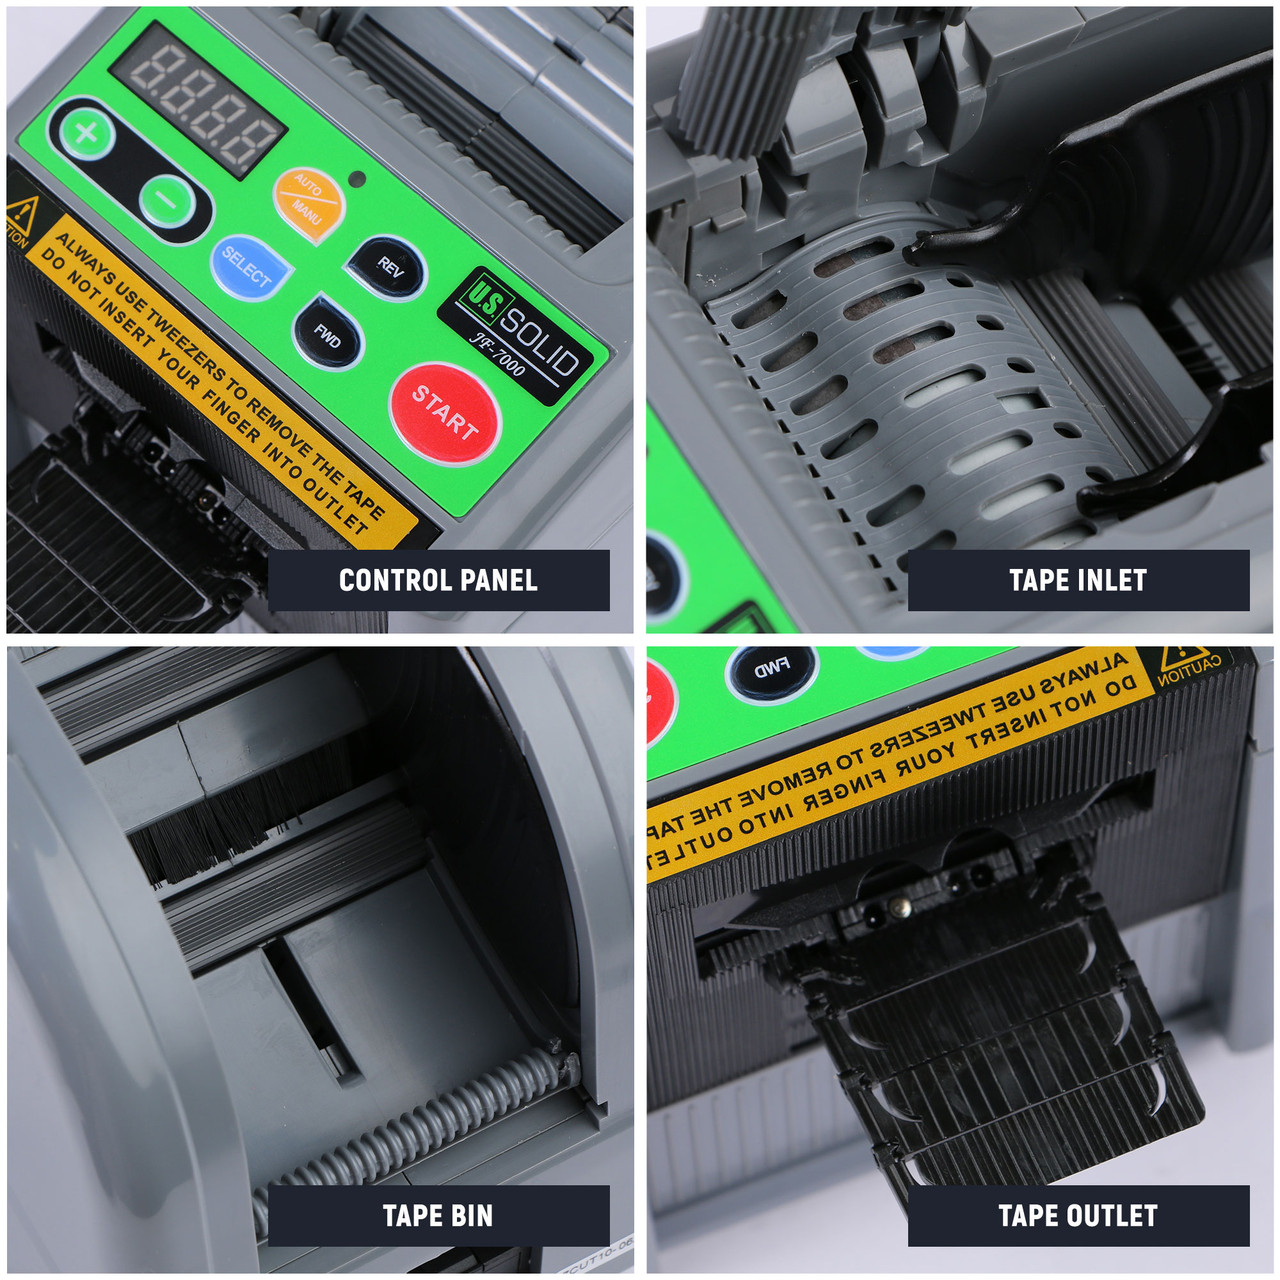 5000-Tape Dispenser - Packaging Tools